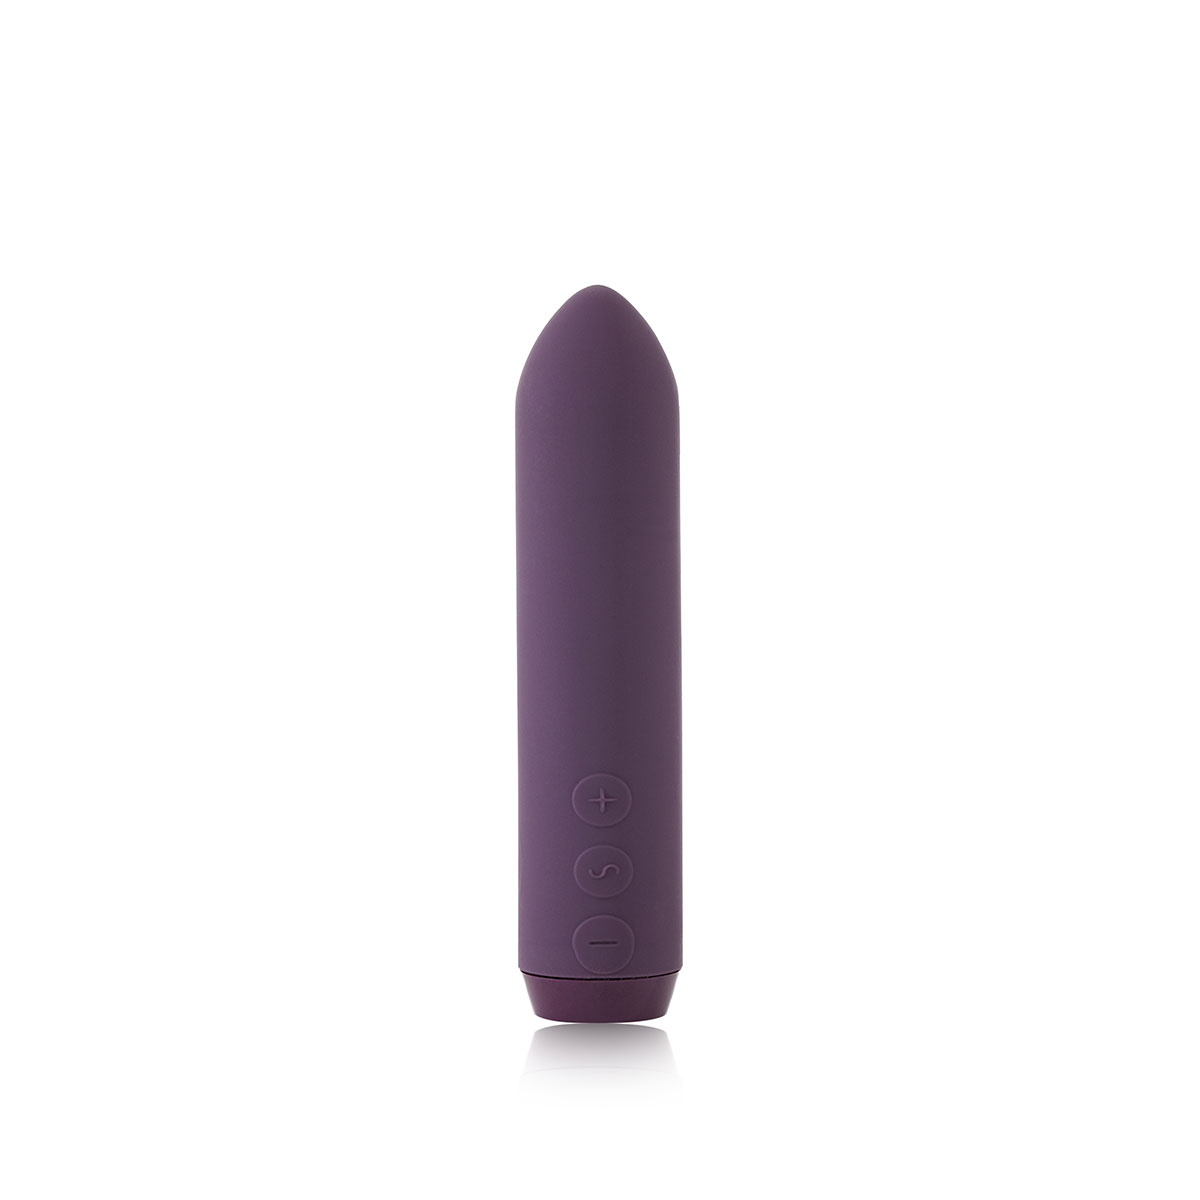 Buy a Je Joue Classic Bullet  Purple vibrator.